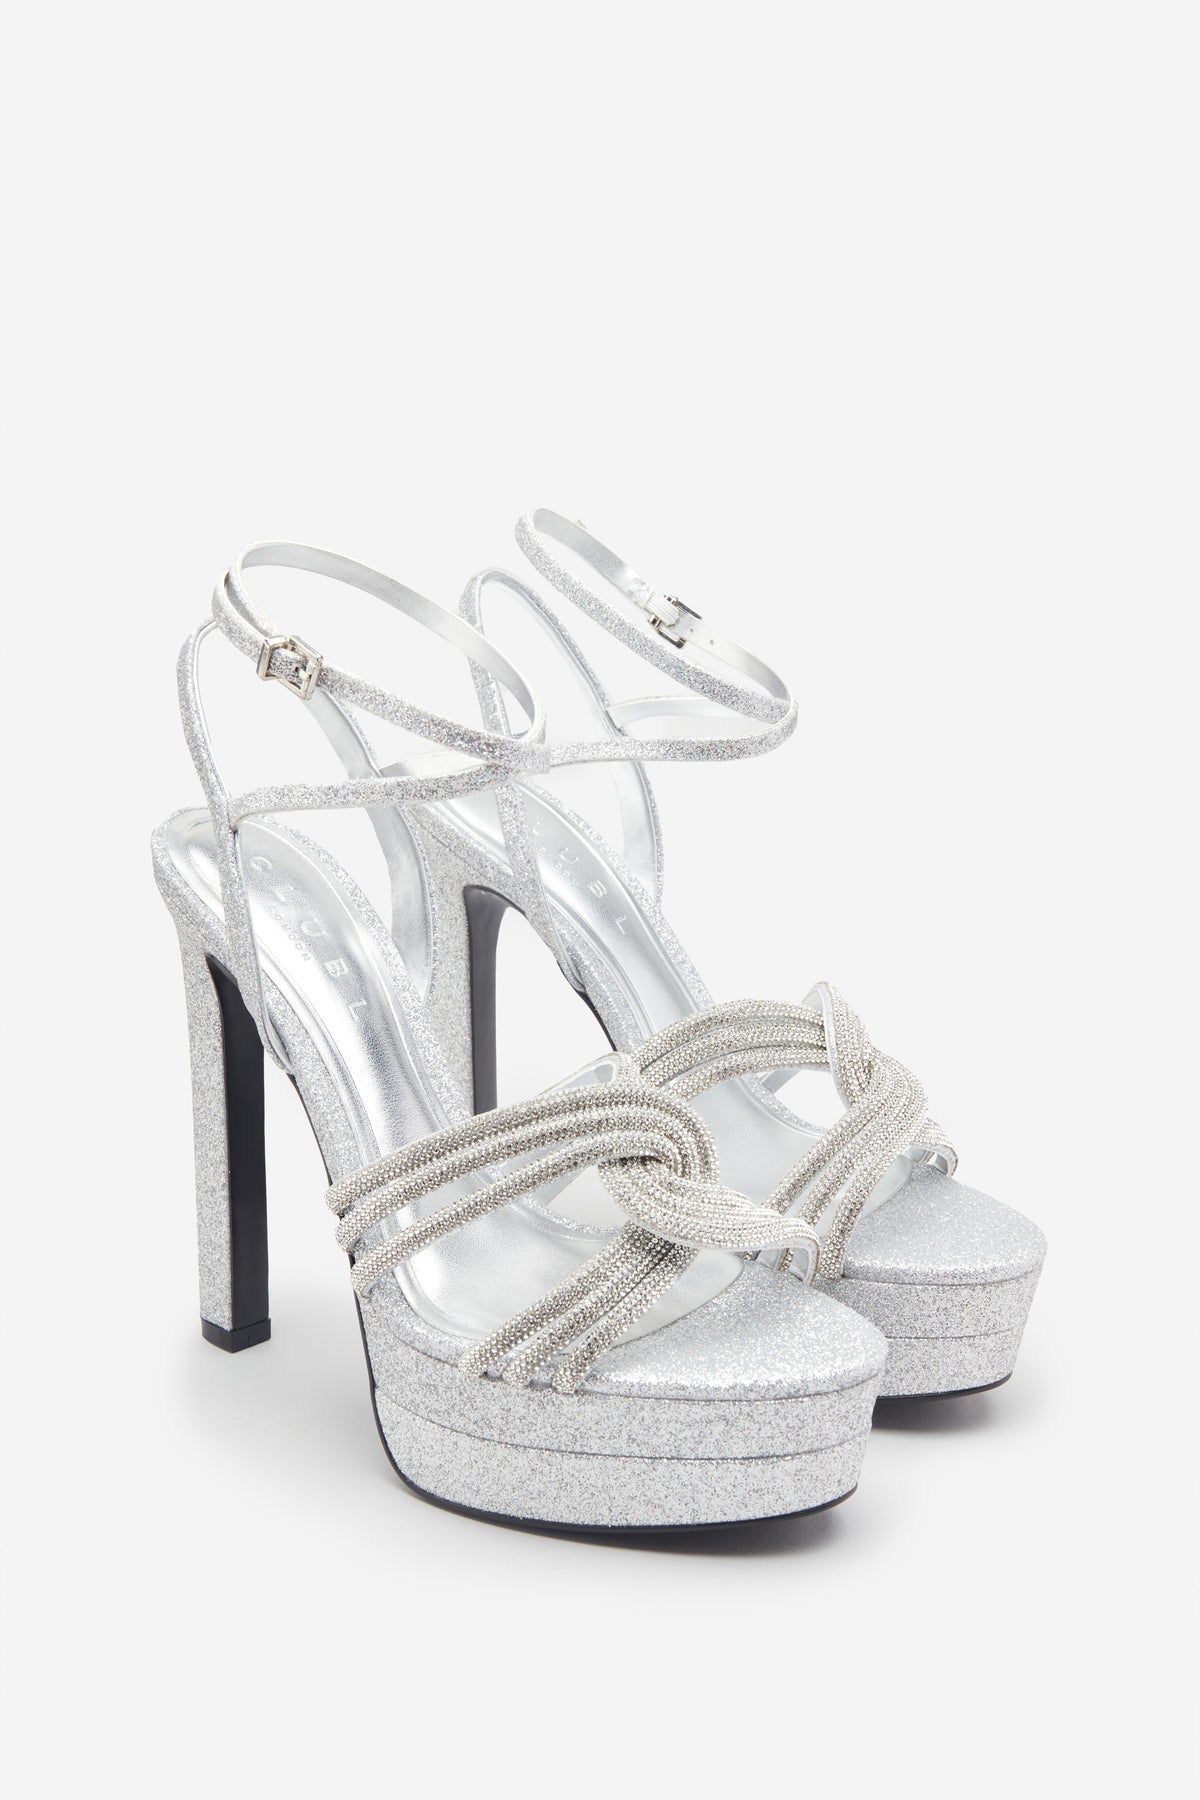 Silver Heeled Sandals Platform Peep Toe Ankle Strap Sandals - Milanoo.com